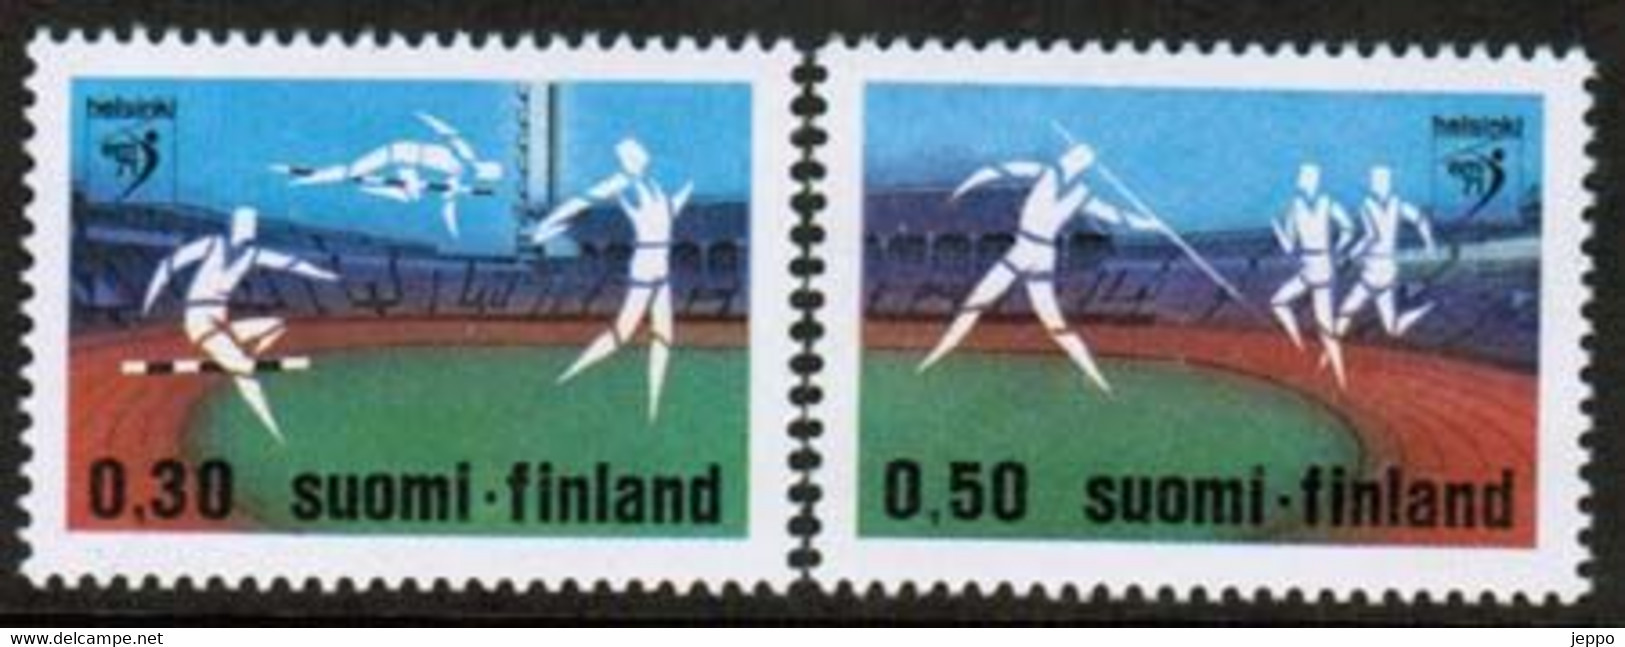 1971 Finland European Athletic Shampionships Complete Set MNH. - Nuevos